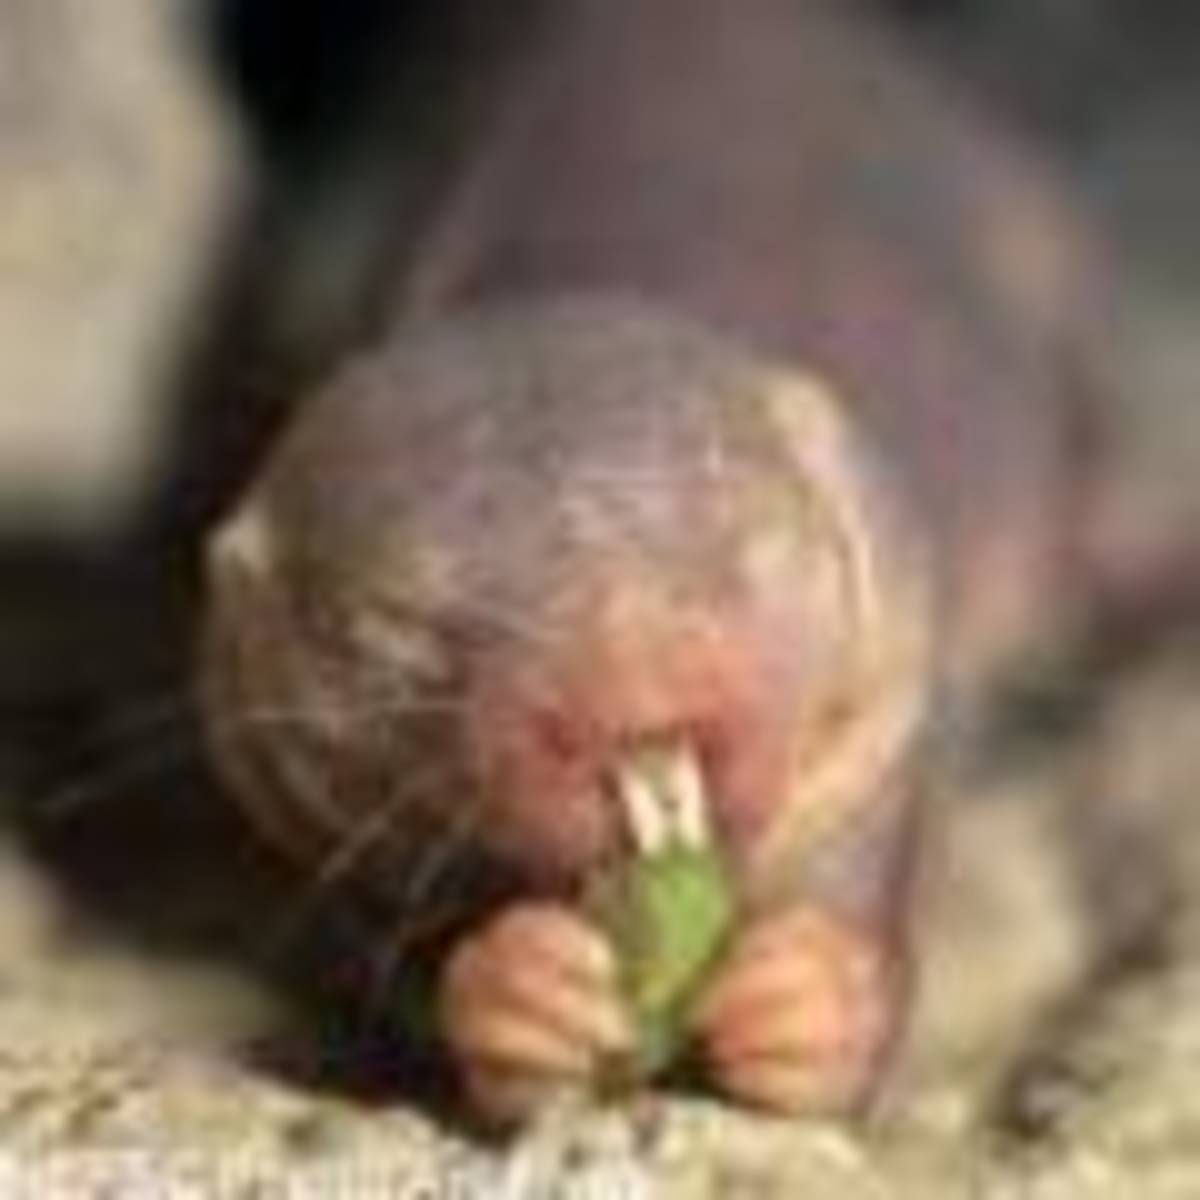 naked-mole-rat